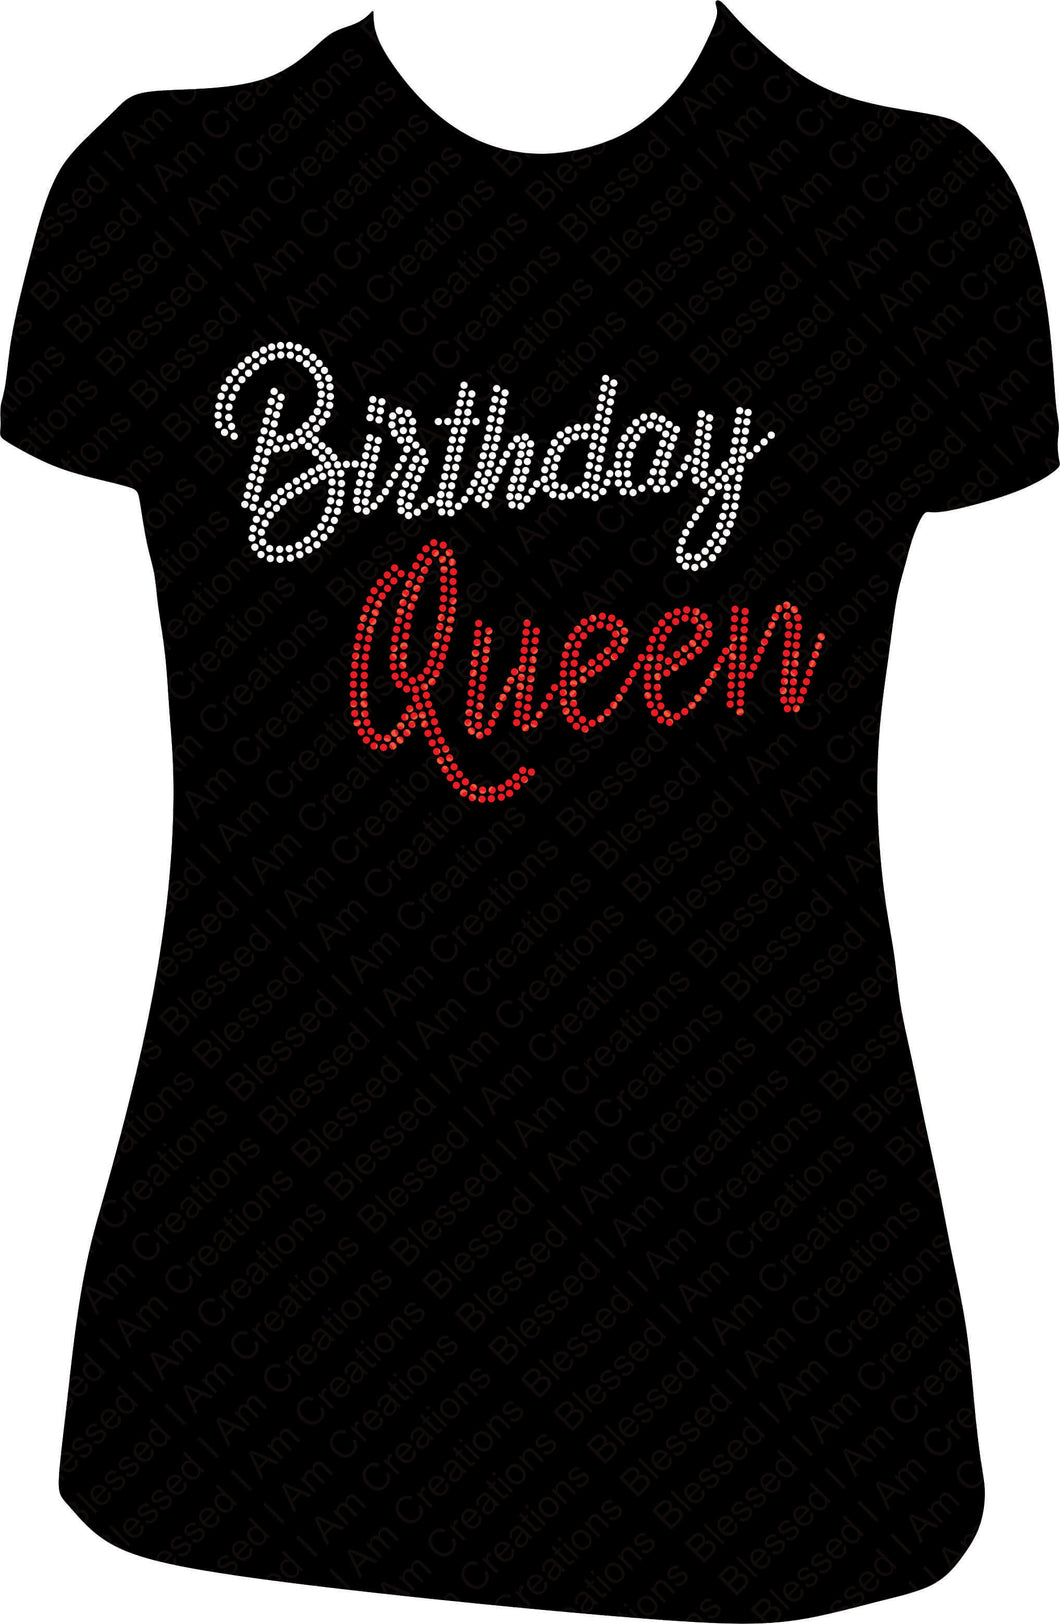 Birthday Queen rhinestone Shirt, Birthday Queen Bling Shirt, Rhinestone Shirt, Bling shirt, queen birthday shirt, Birthday shirt,